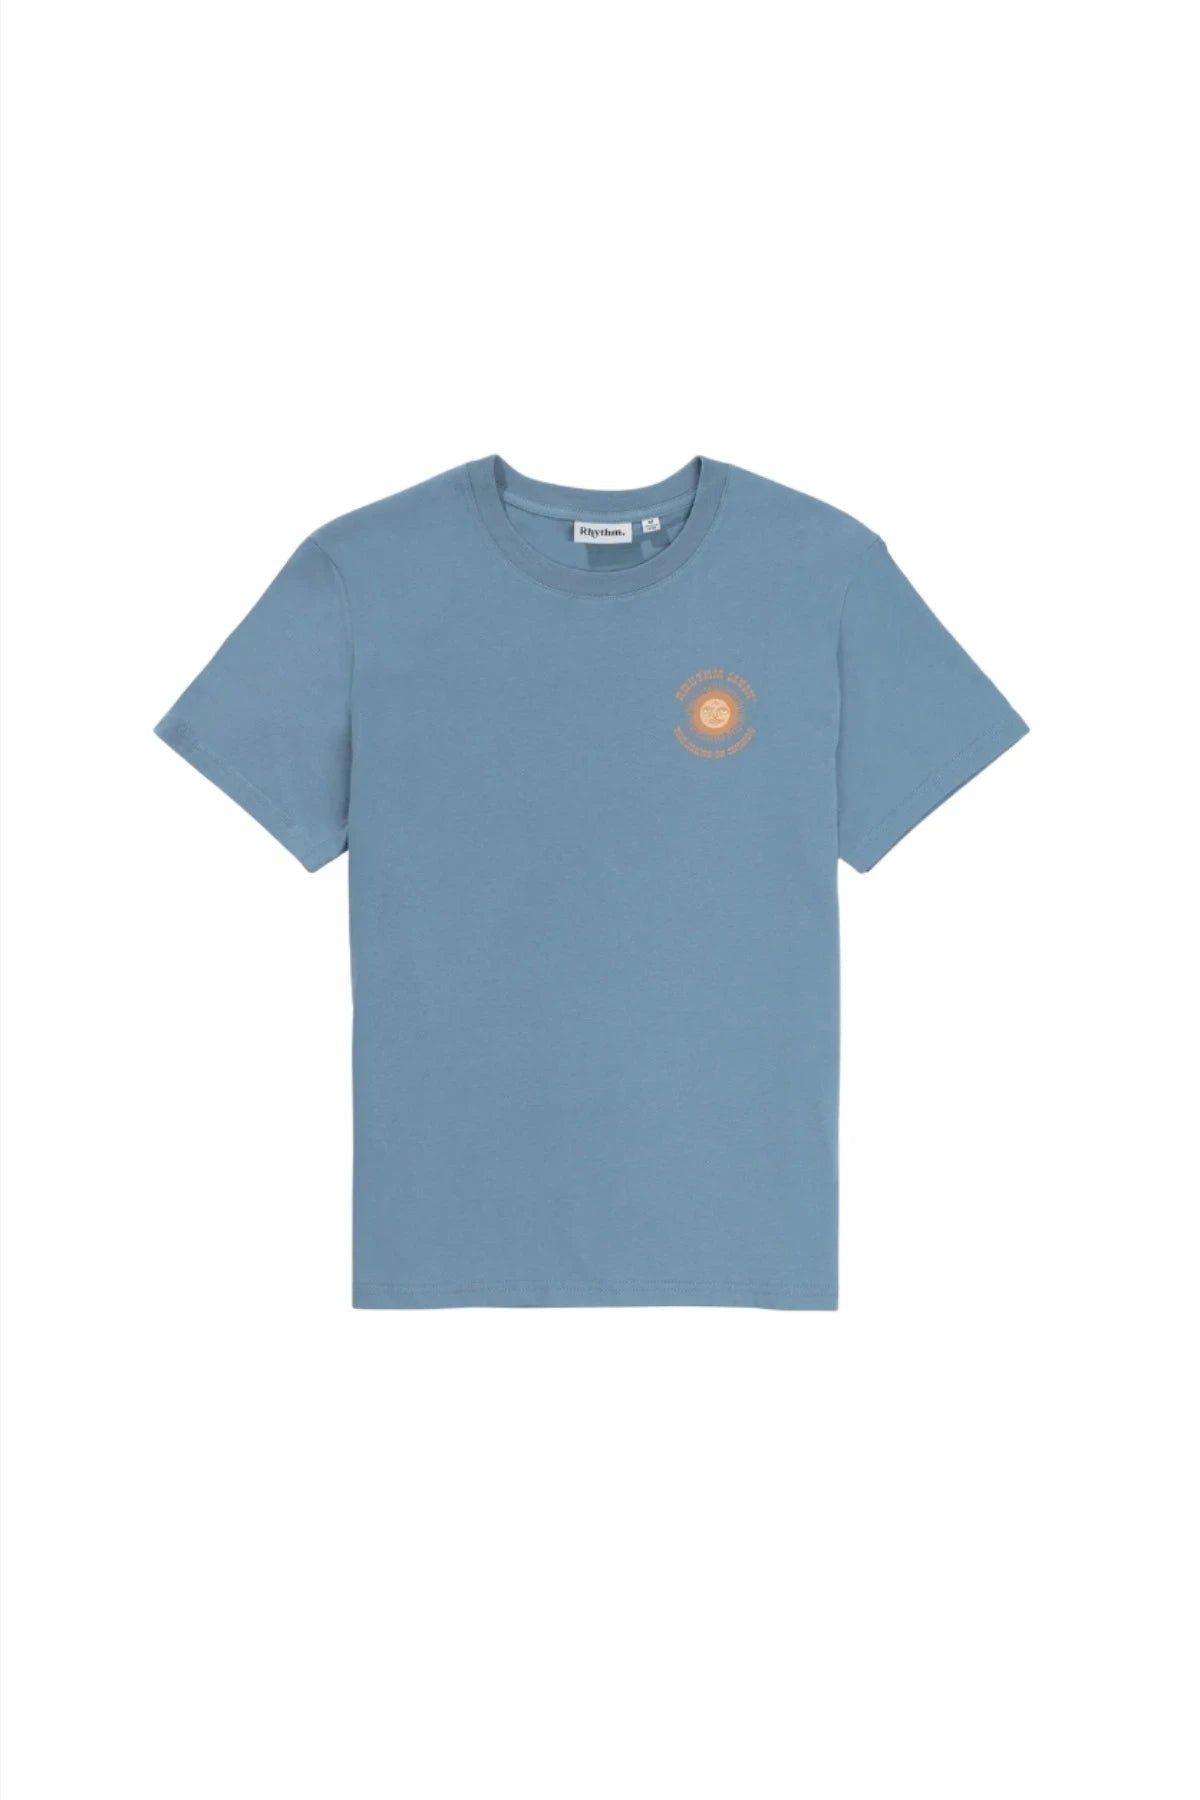 RHYTHM Sun Life T-Shirt Vintage Blue